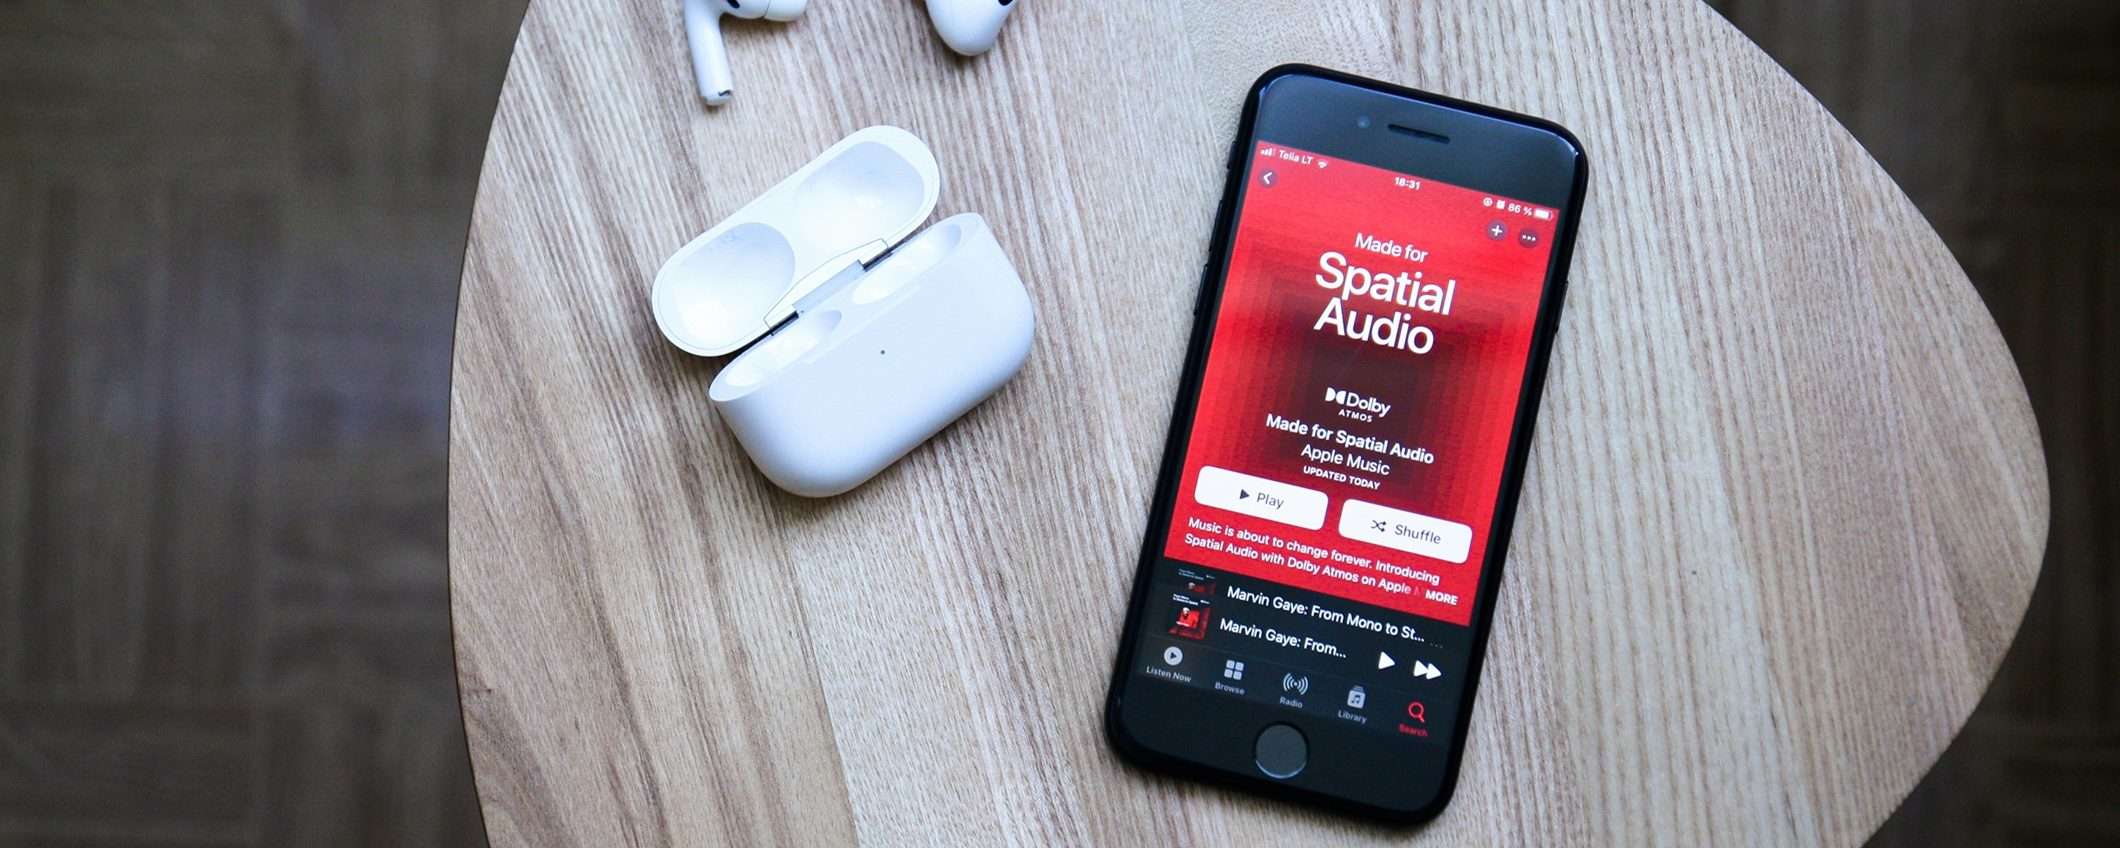 Apple Music: bonus royalty del 10% per la musica in audio spaziale